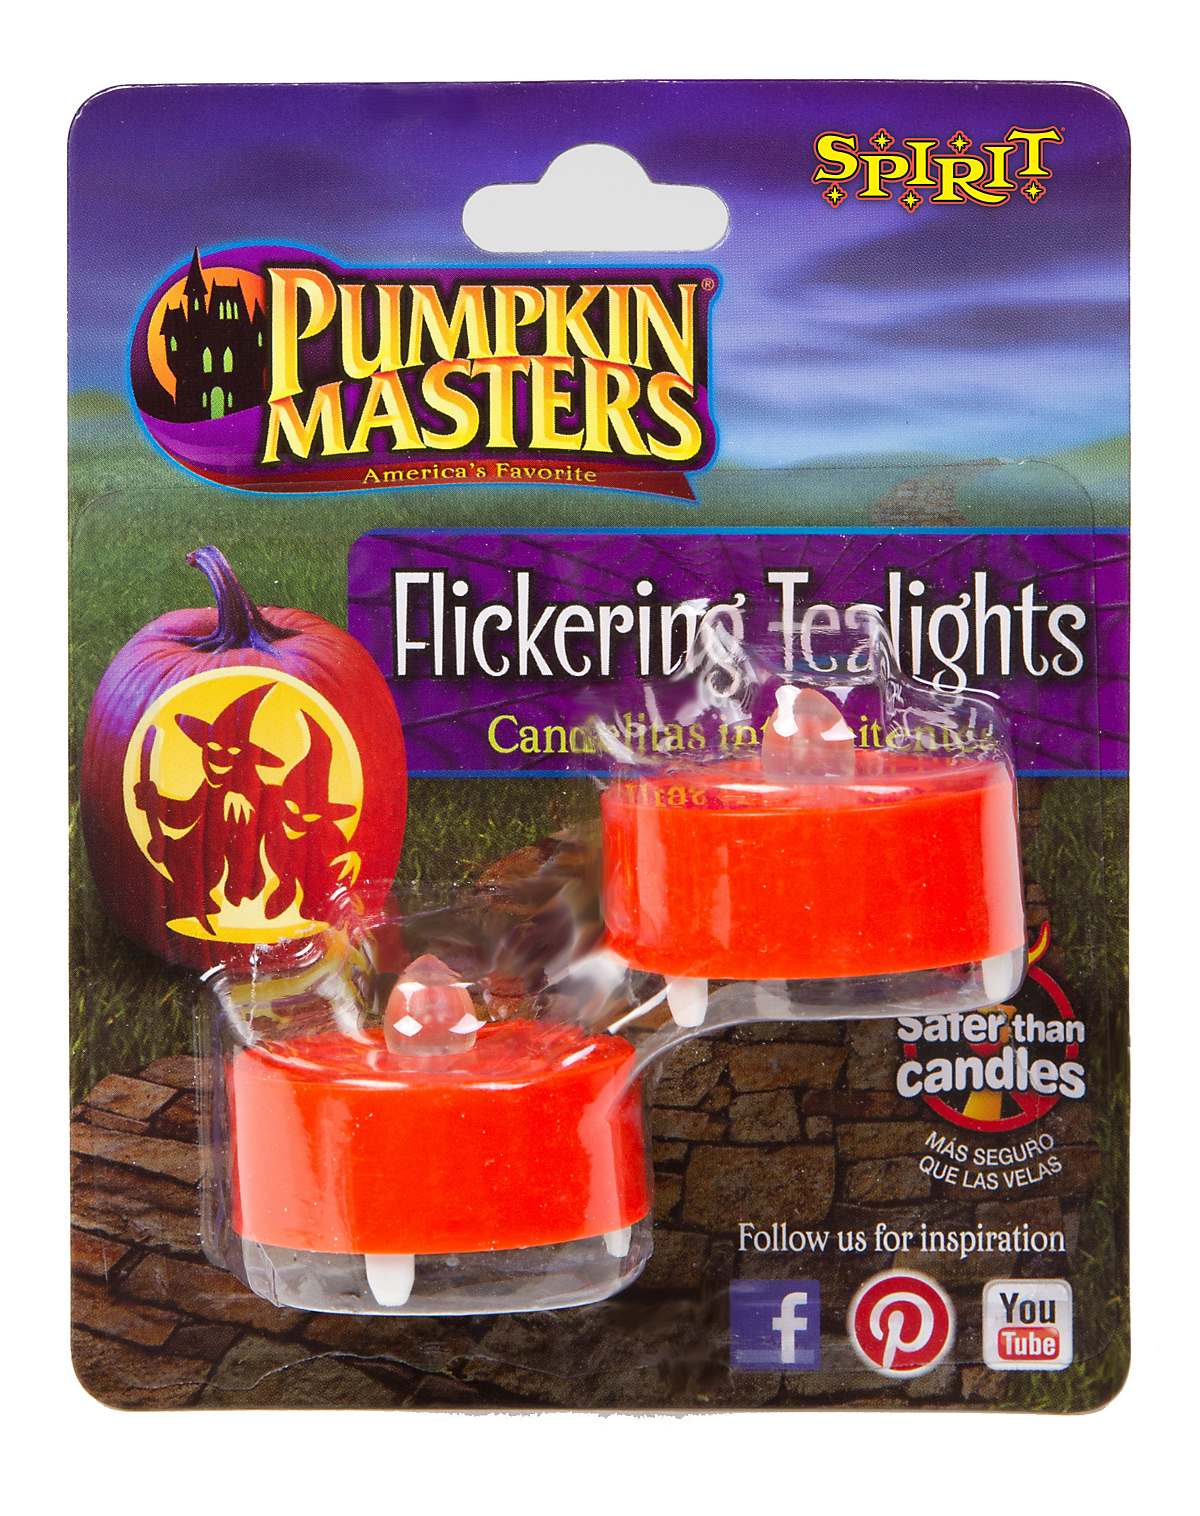 Flickering Pumpkin Tealights